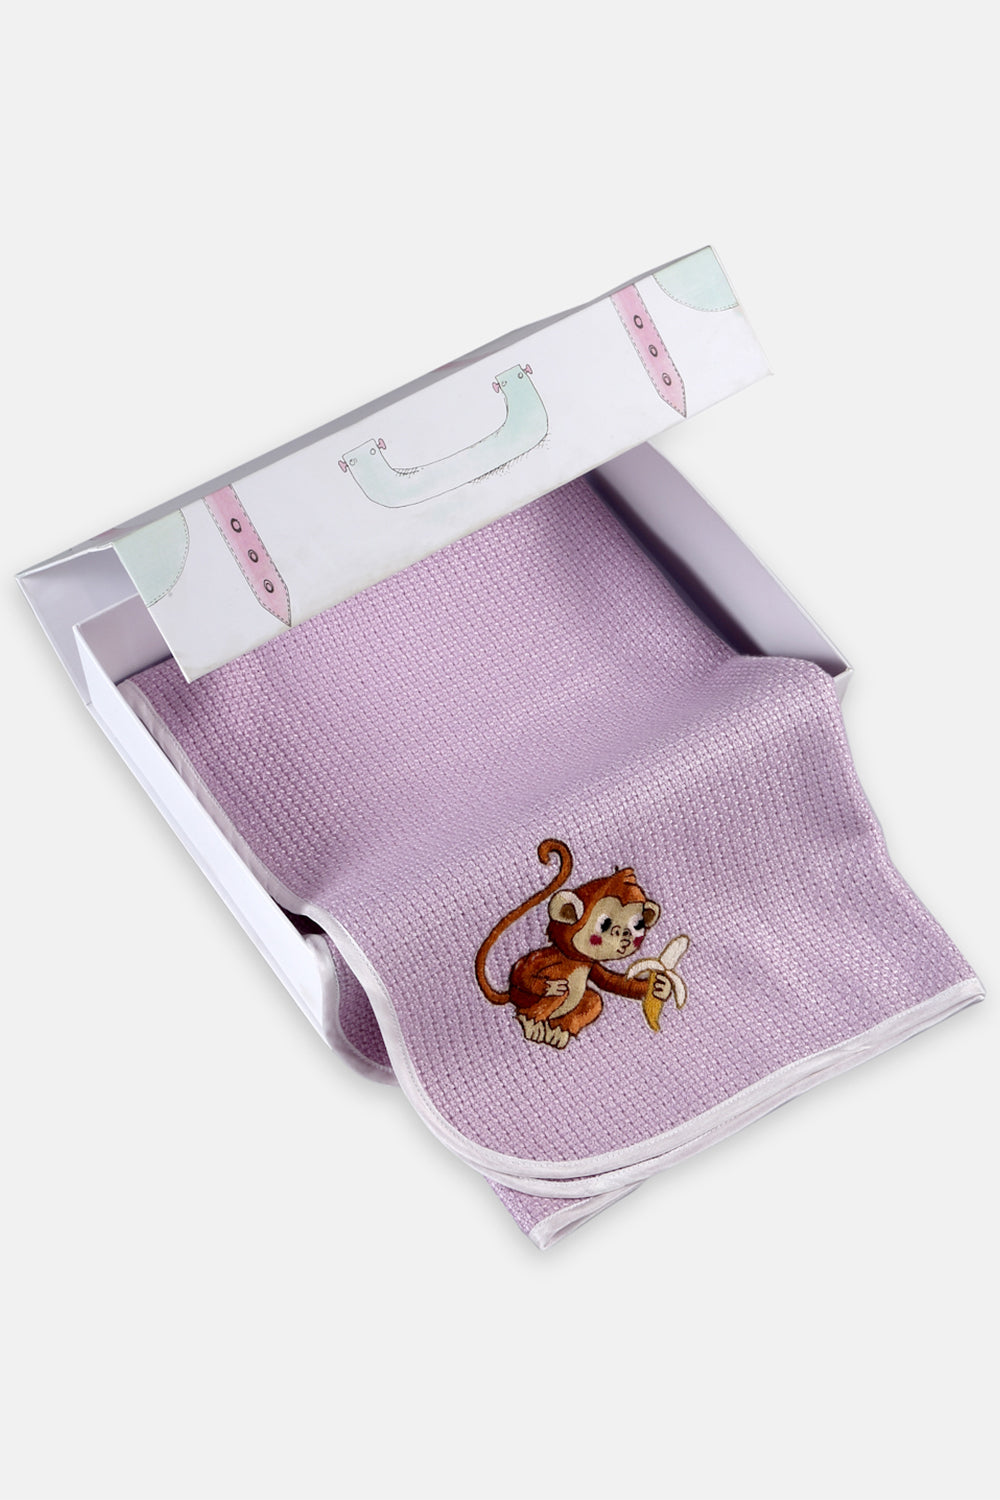 Lino Cashmere Silk Blanket - Monkey